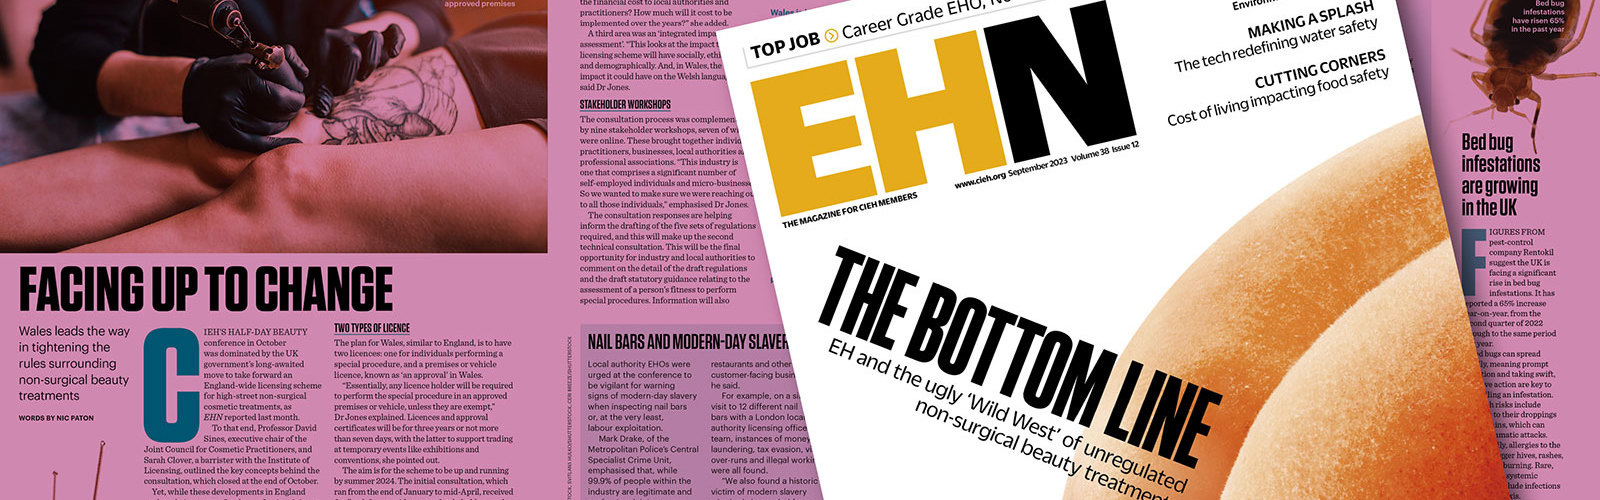 Cover of EHN magazine